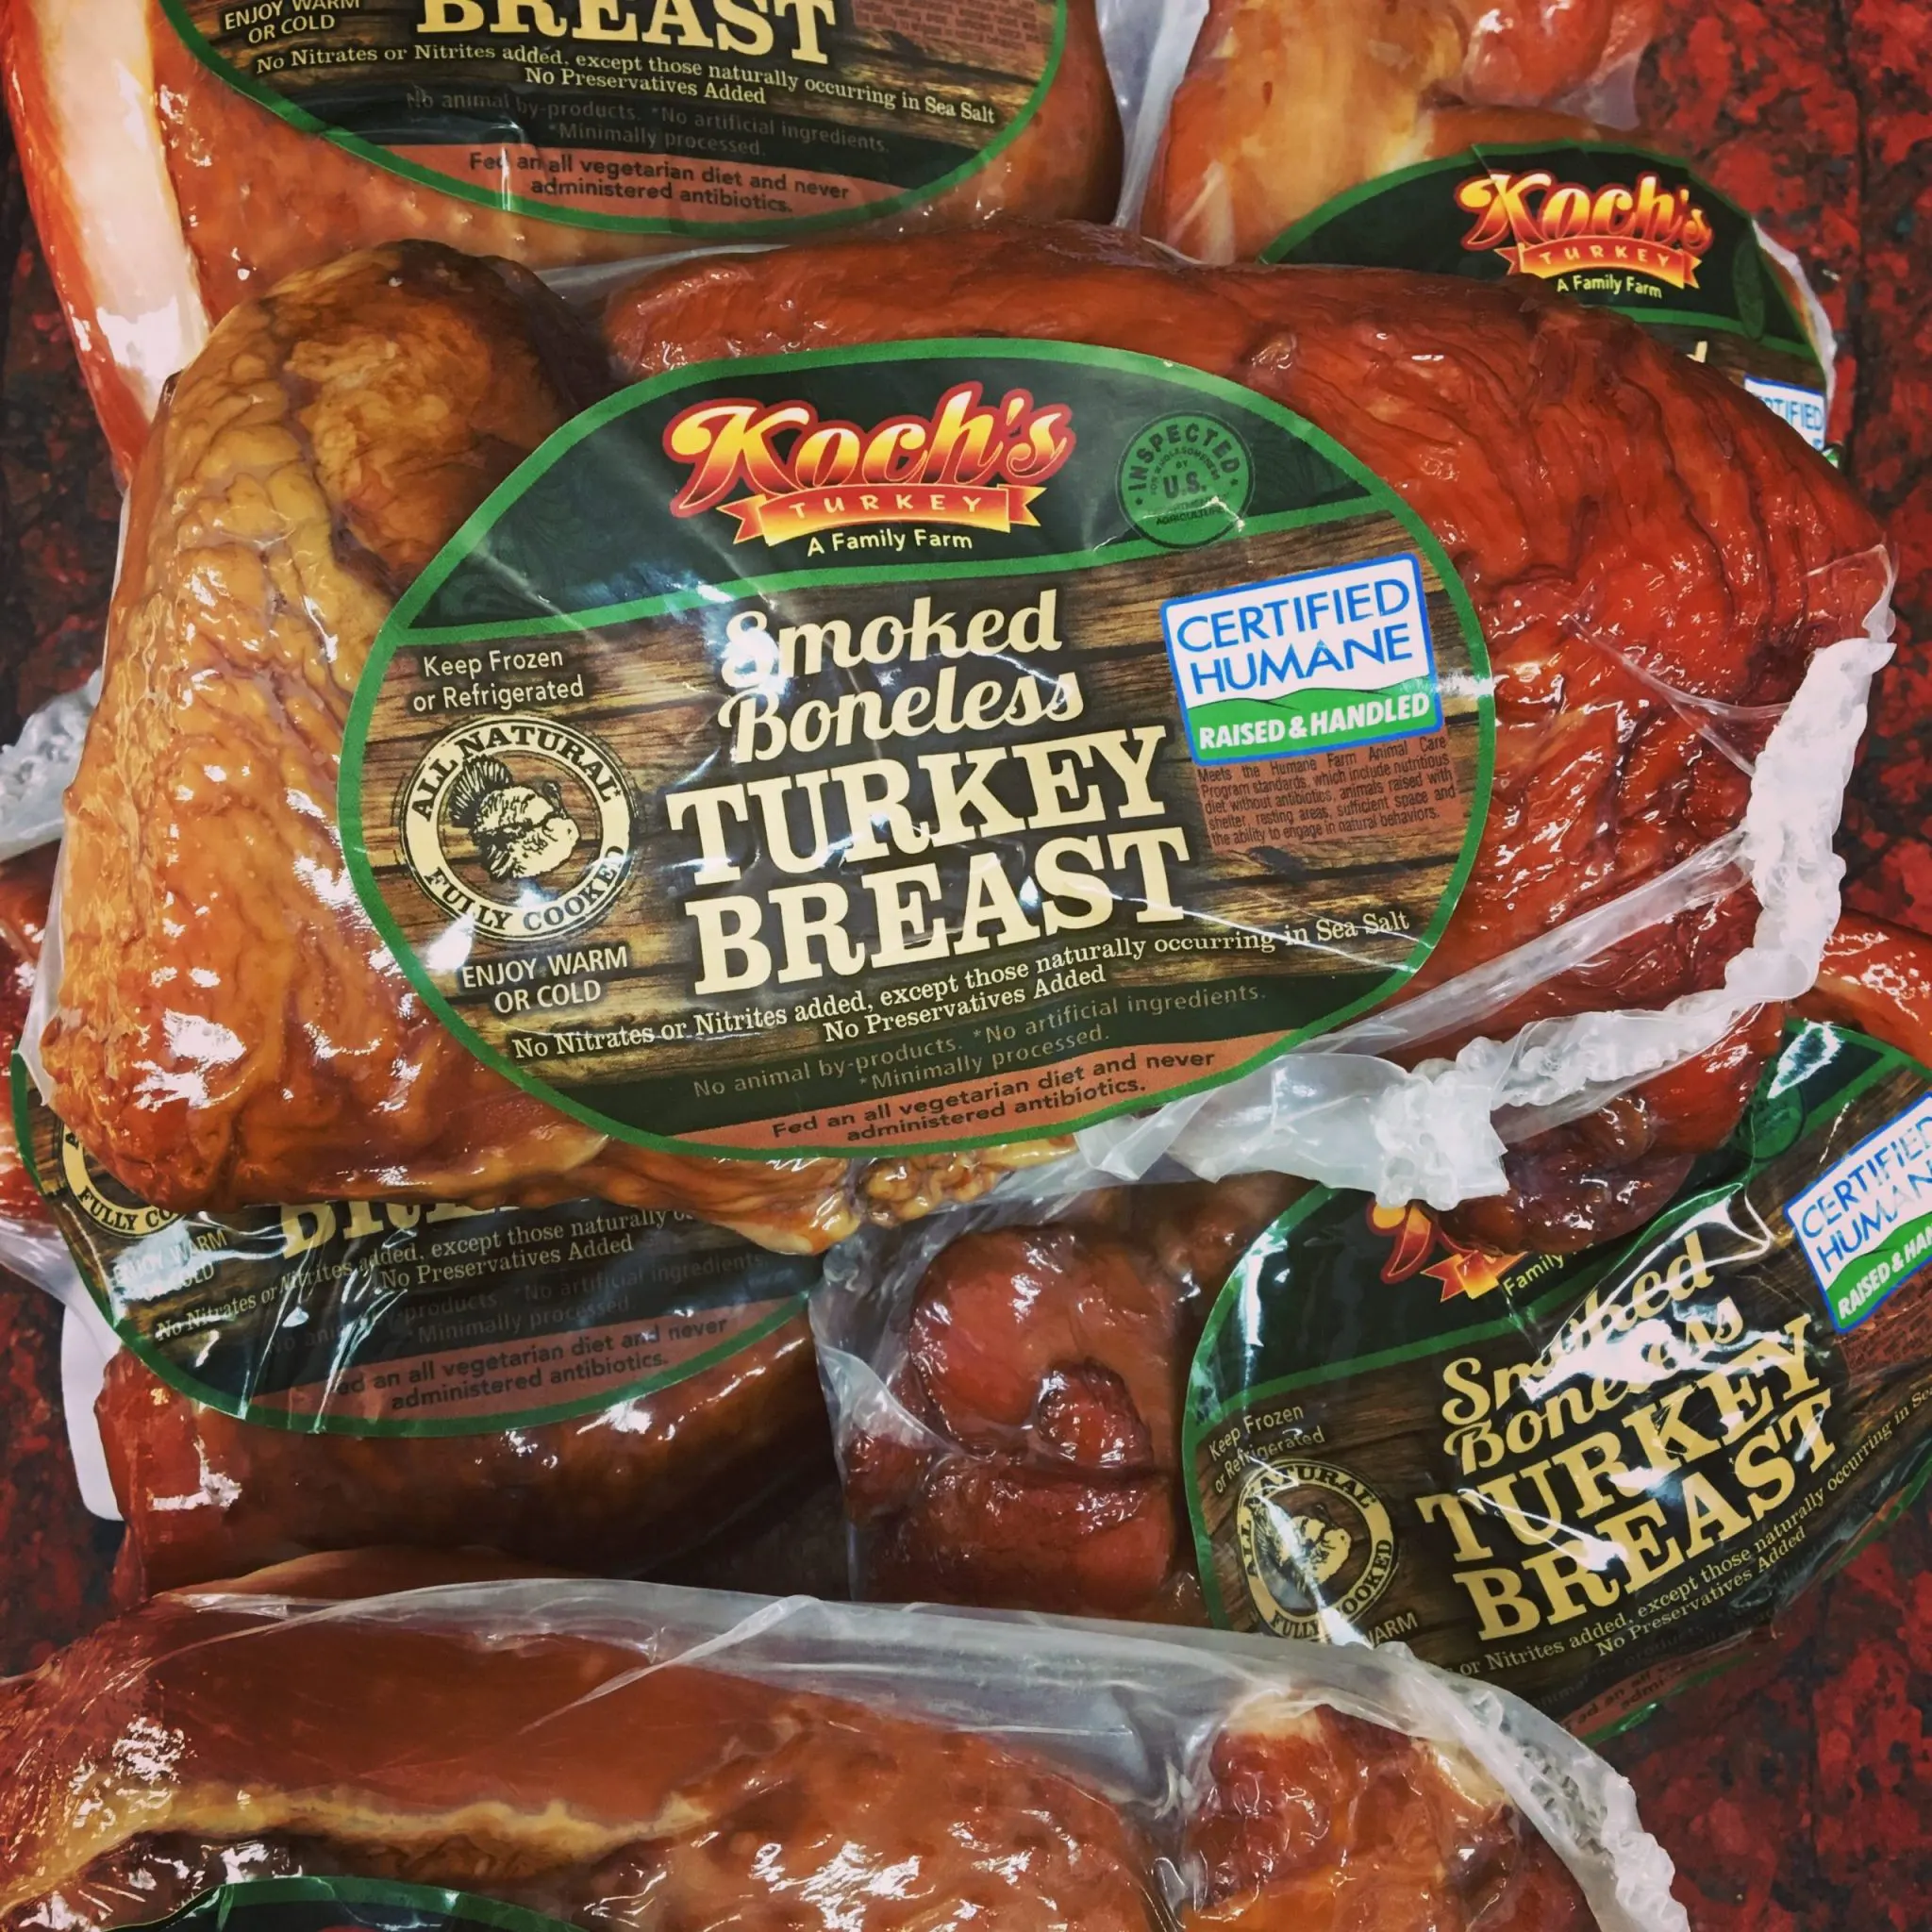 Smoked Boneless Turkey Breast